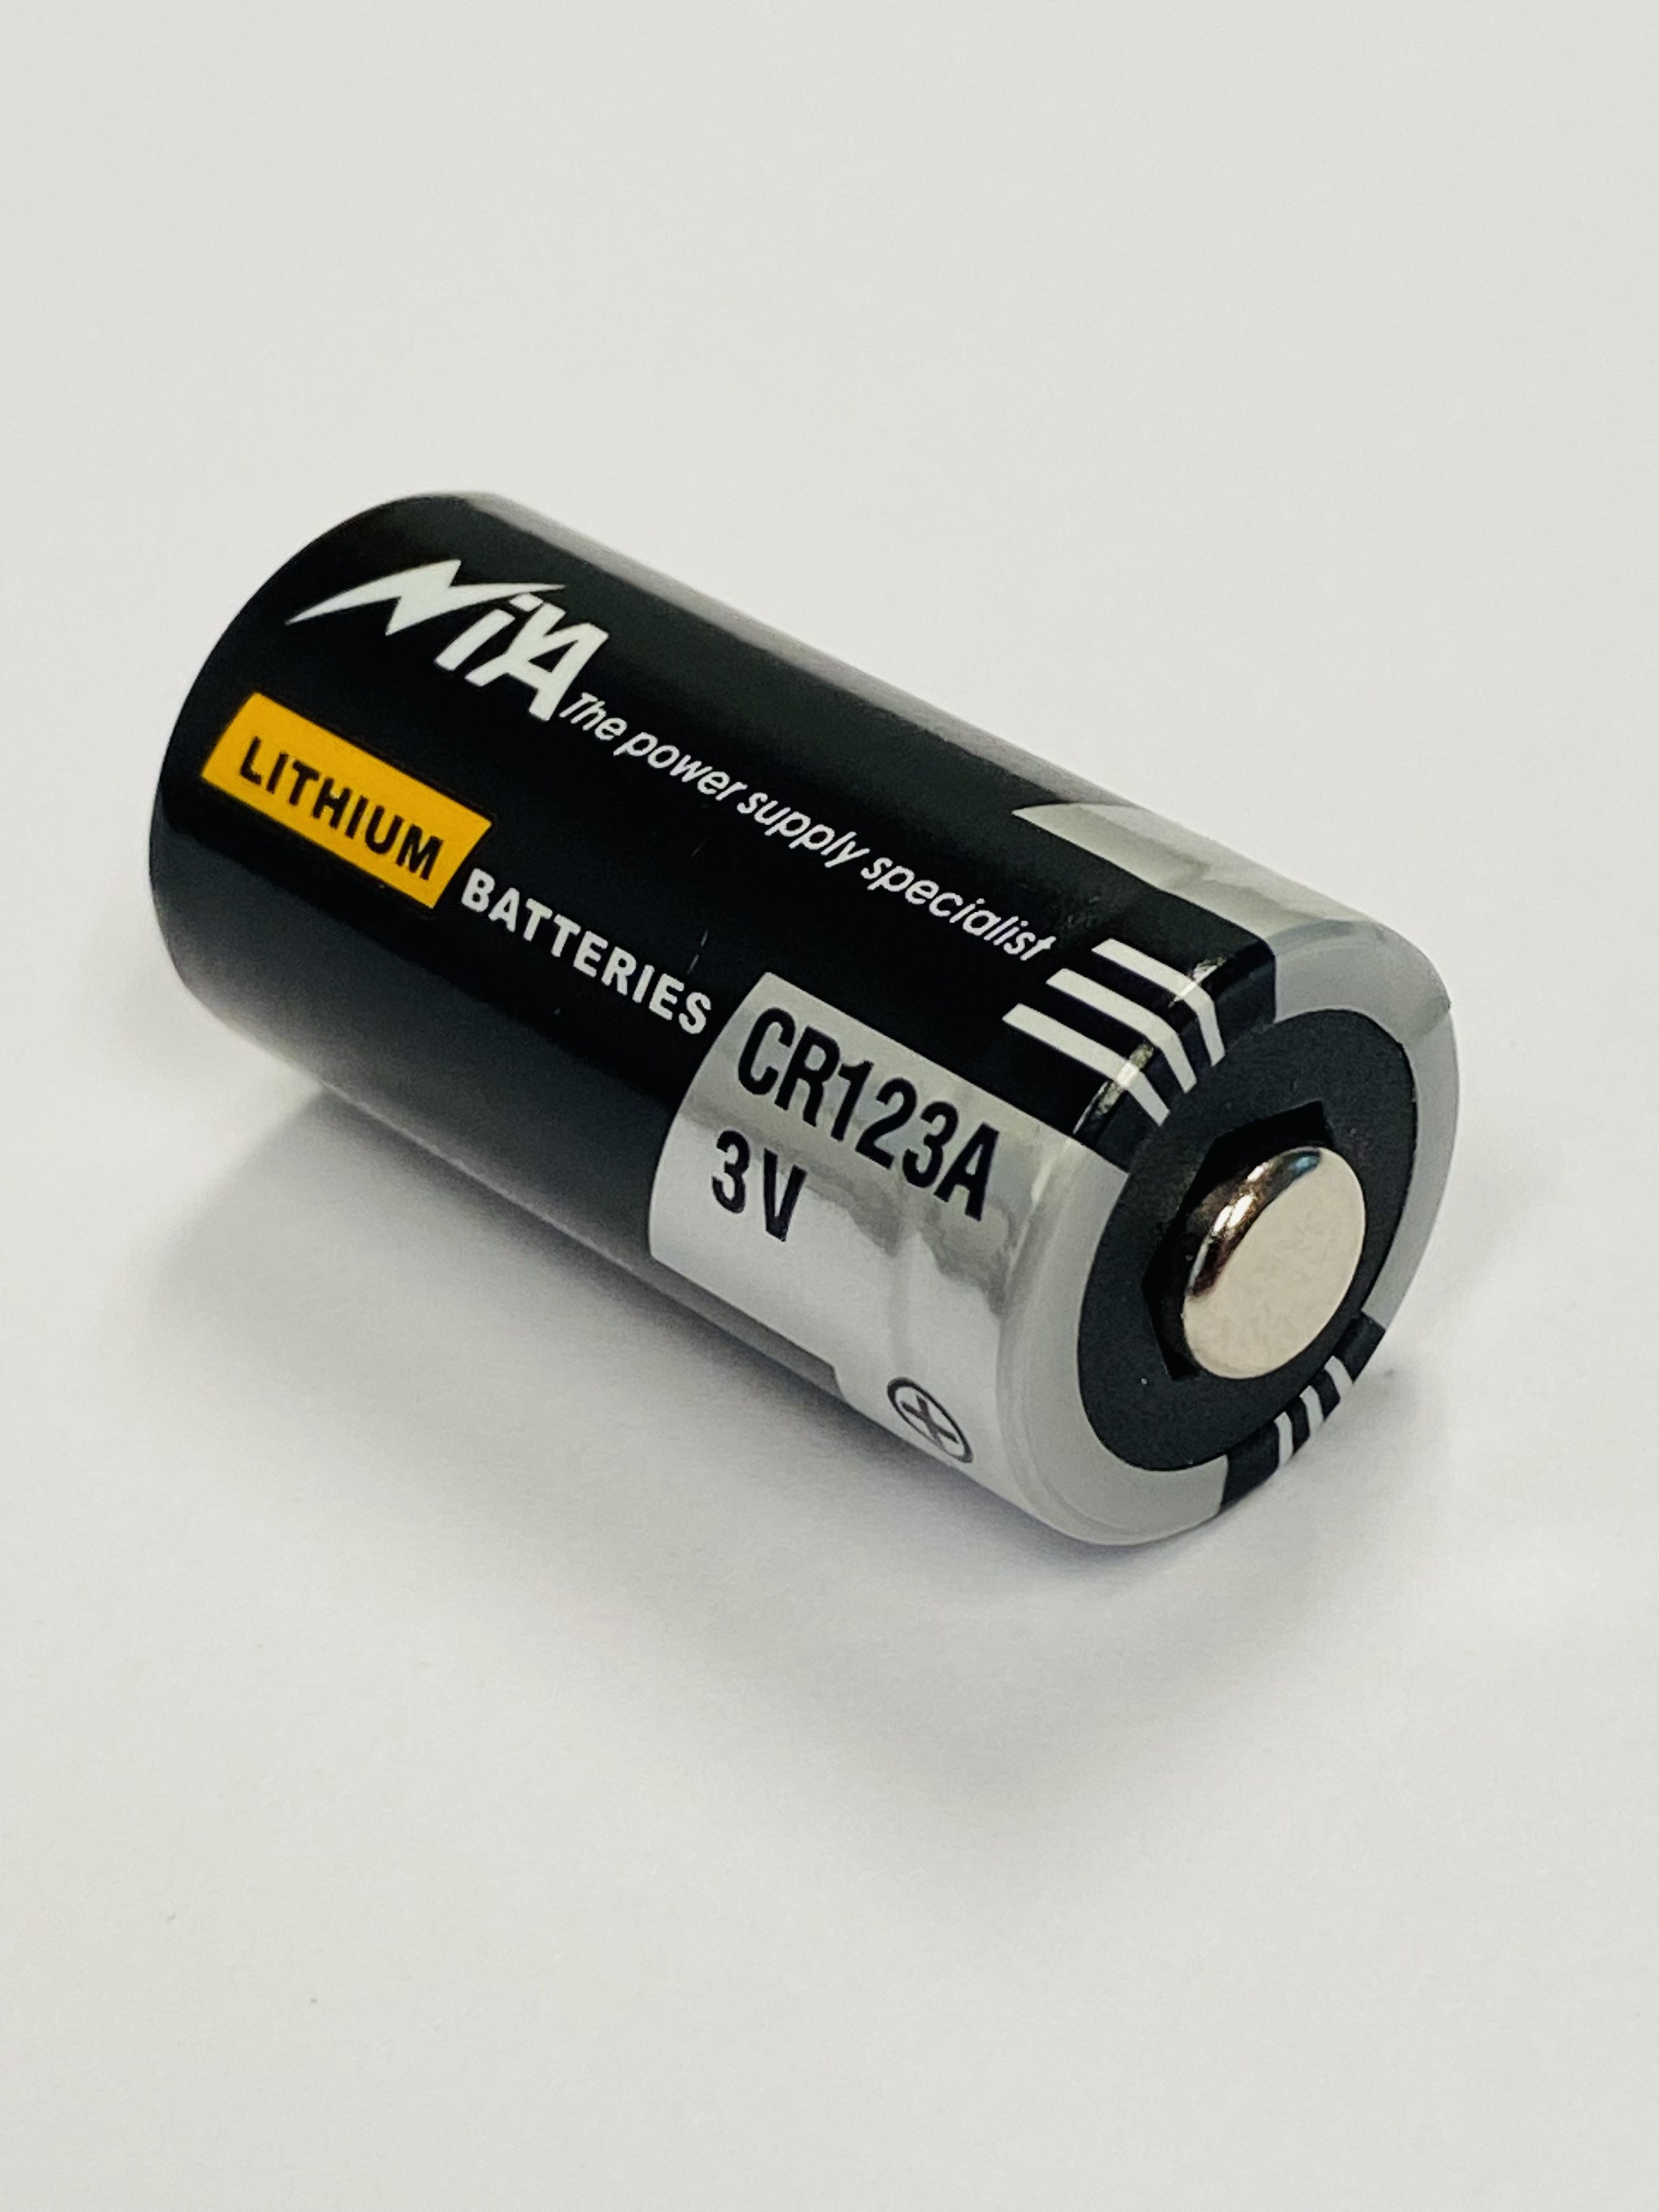 ADI 2500 replacement battery